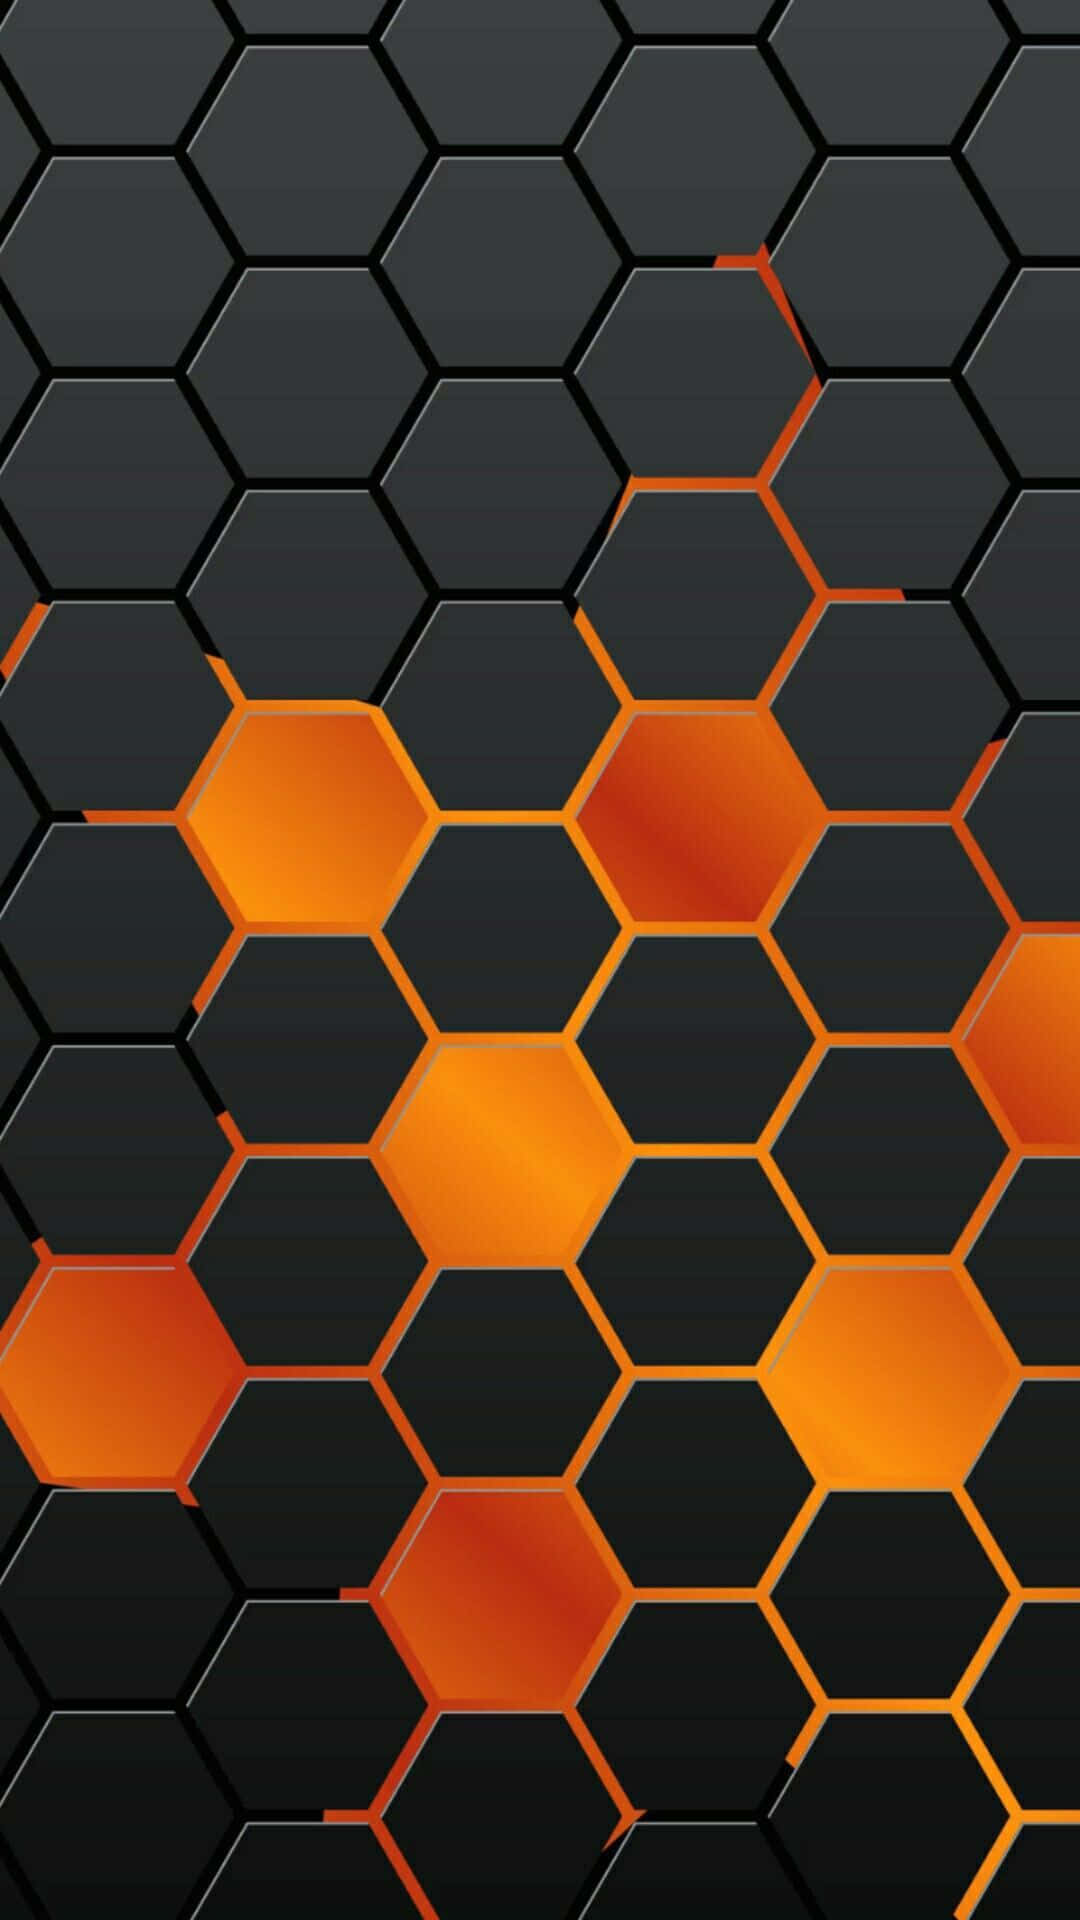 Imagende Patrón De Panal Hexagonal En Negro Y Naranja